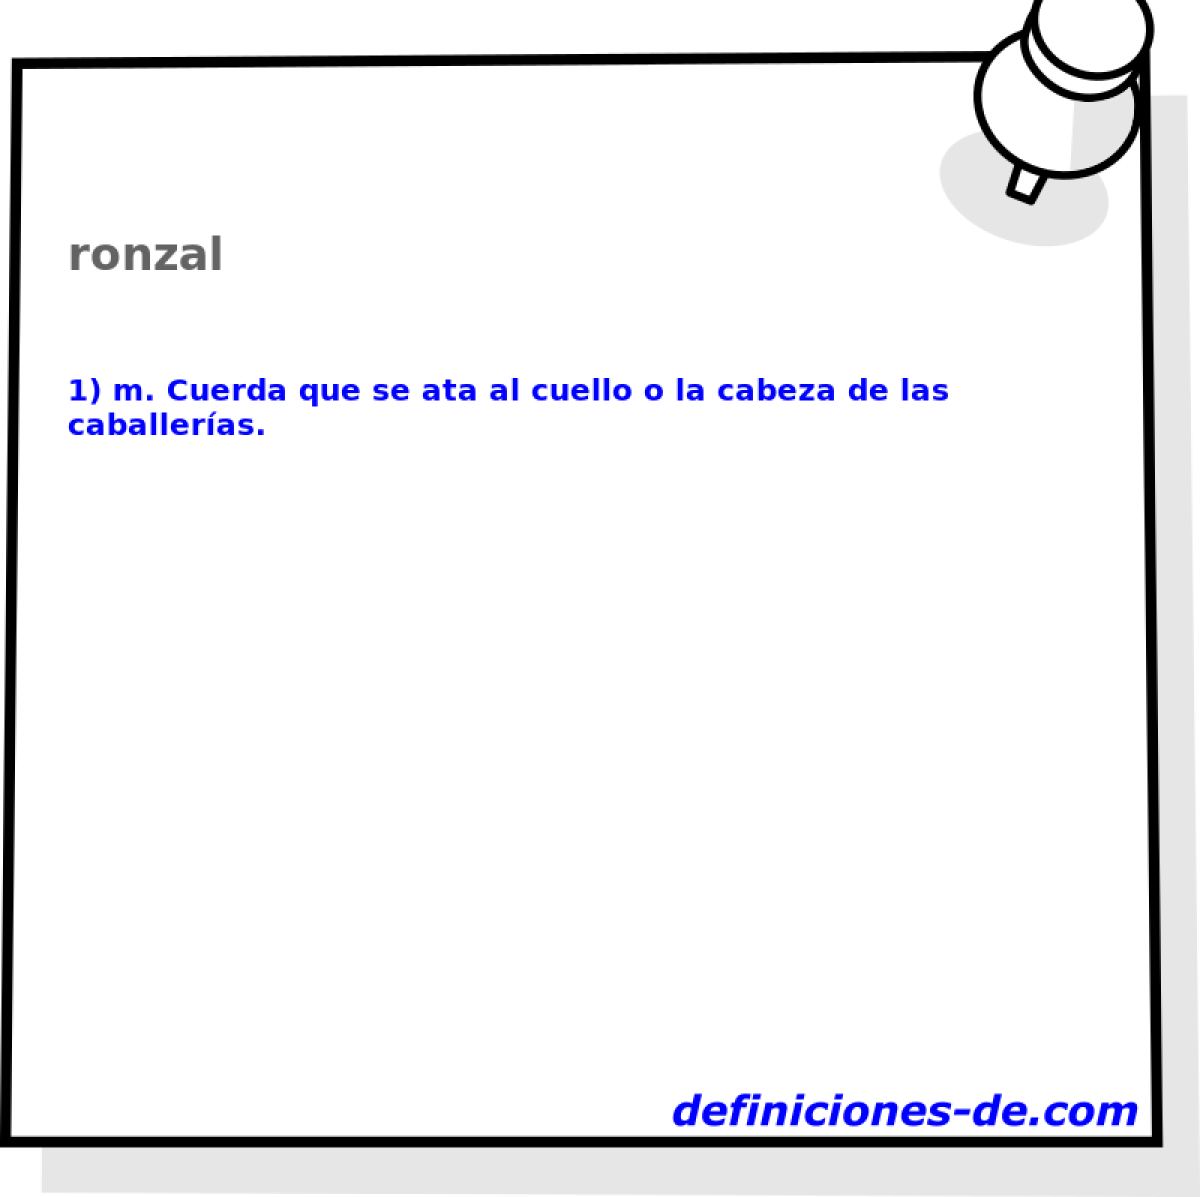 ronzal 